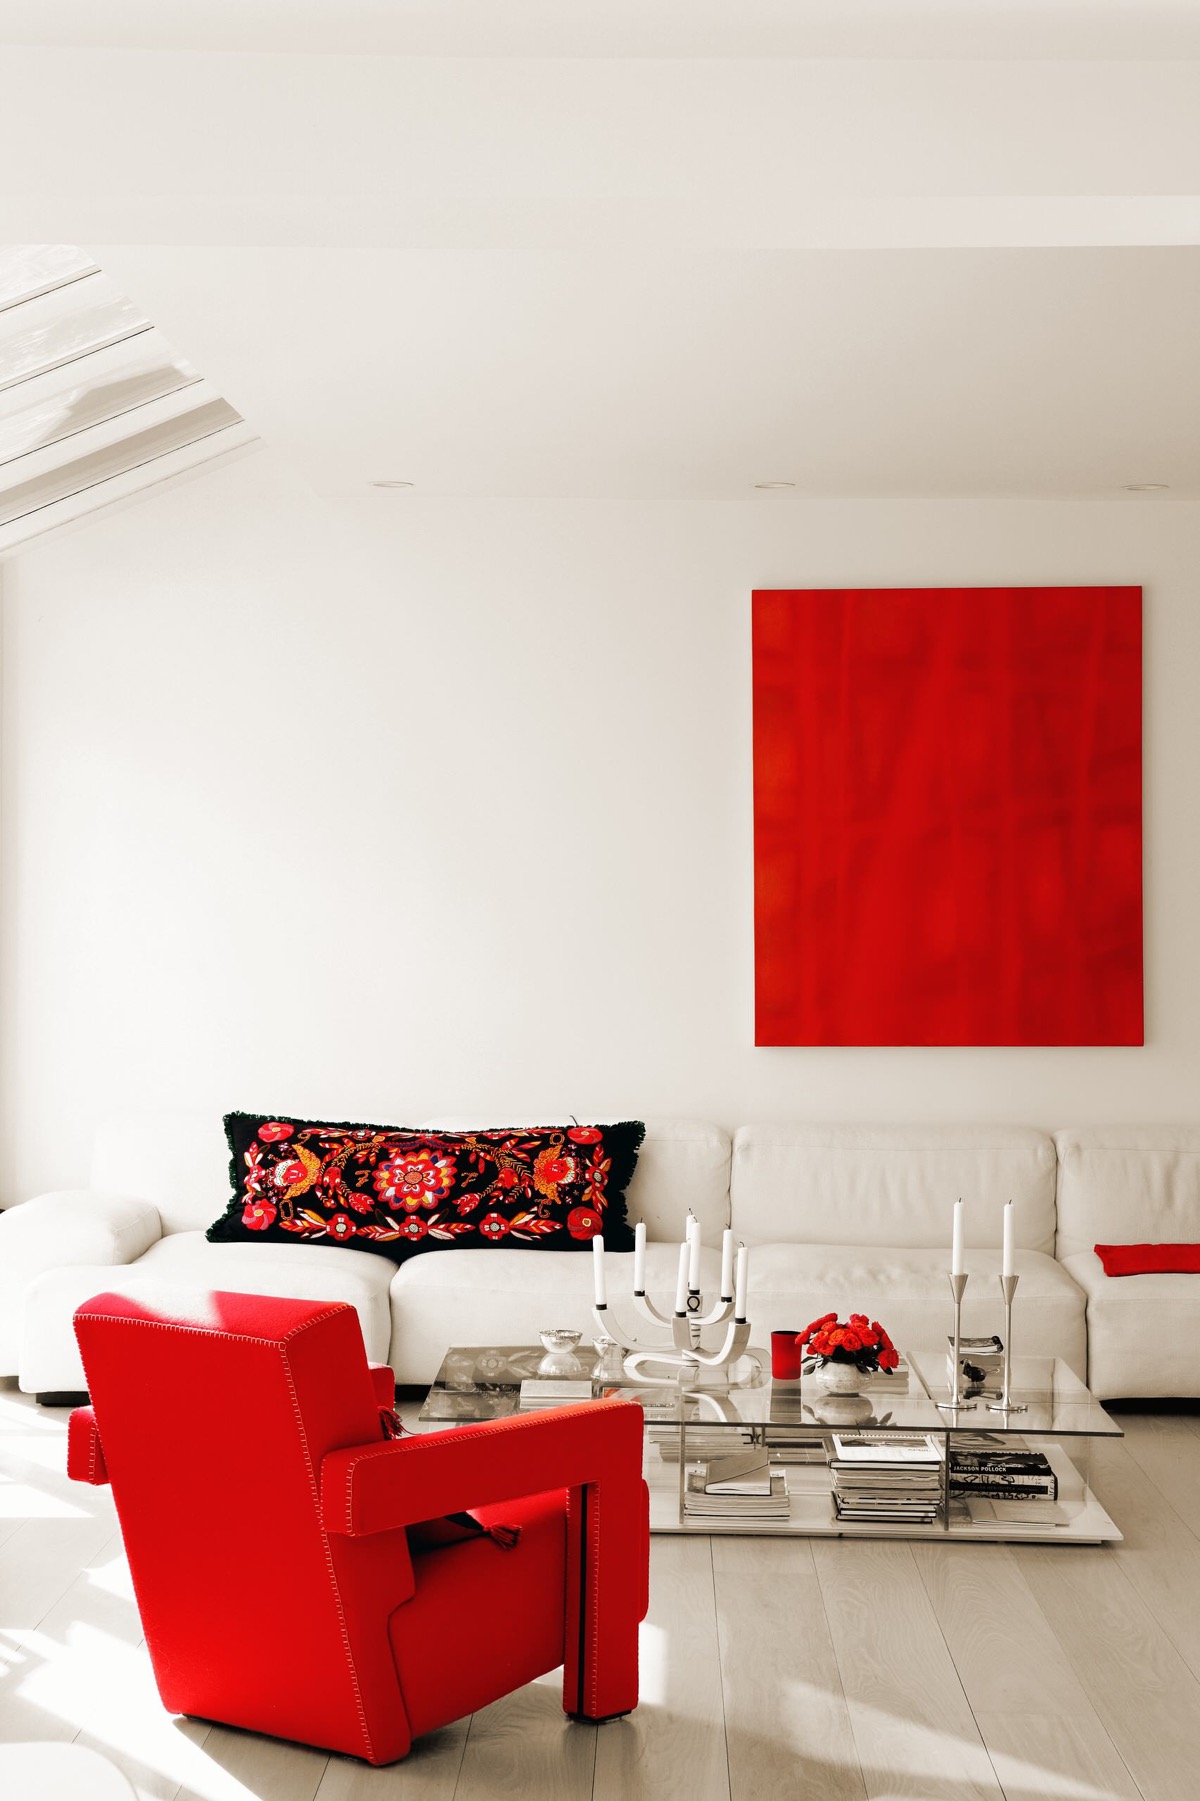 https://www.home-designing.com/wp-content/uploads/2020/03/red-living-room-furniture.jpg